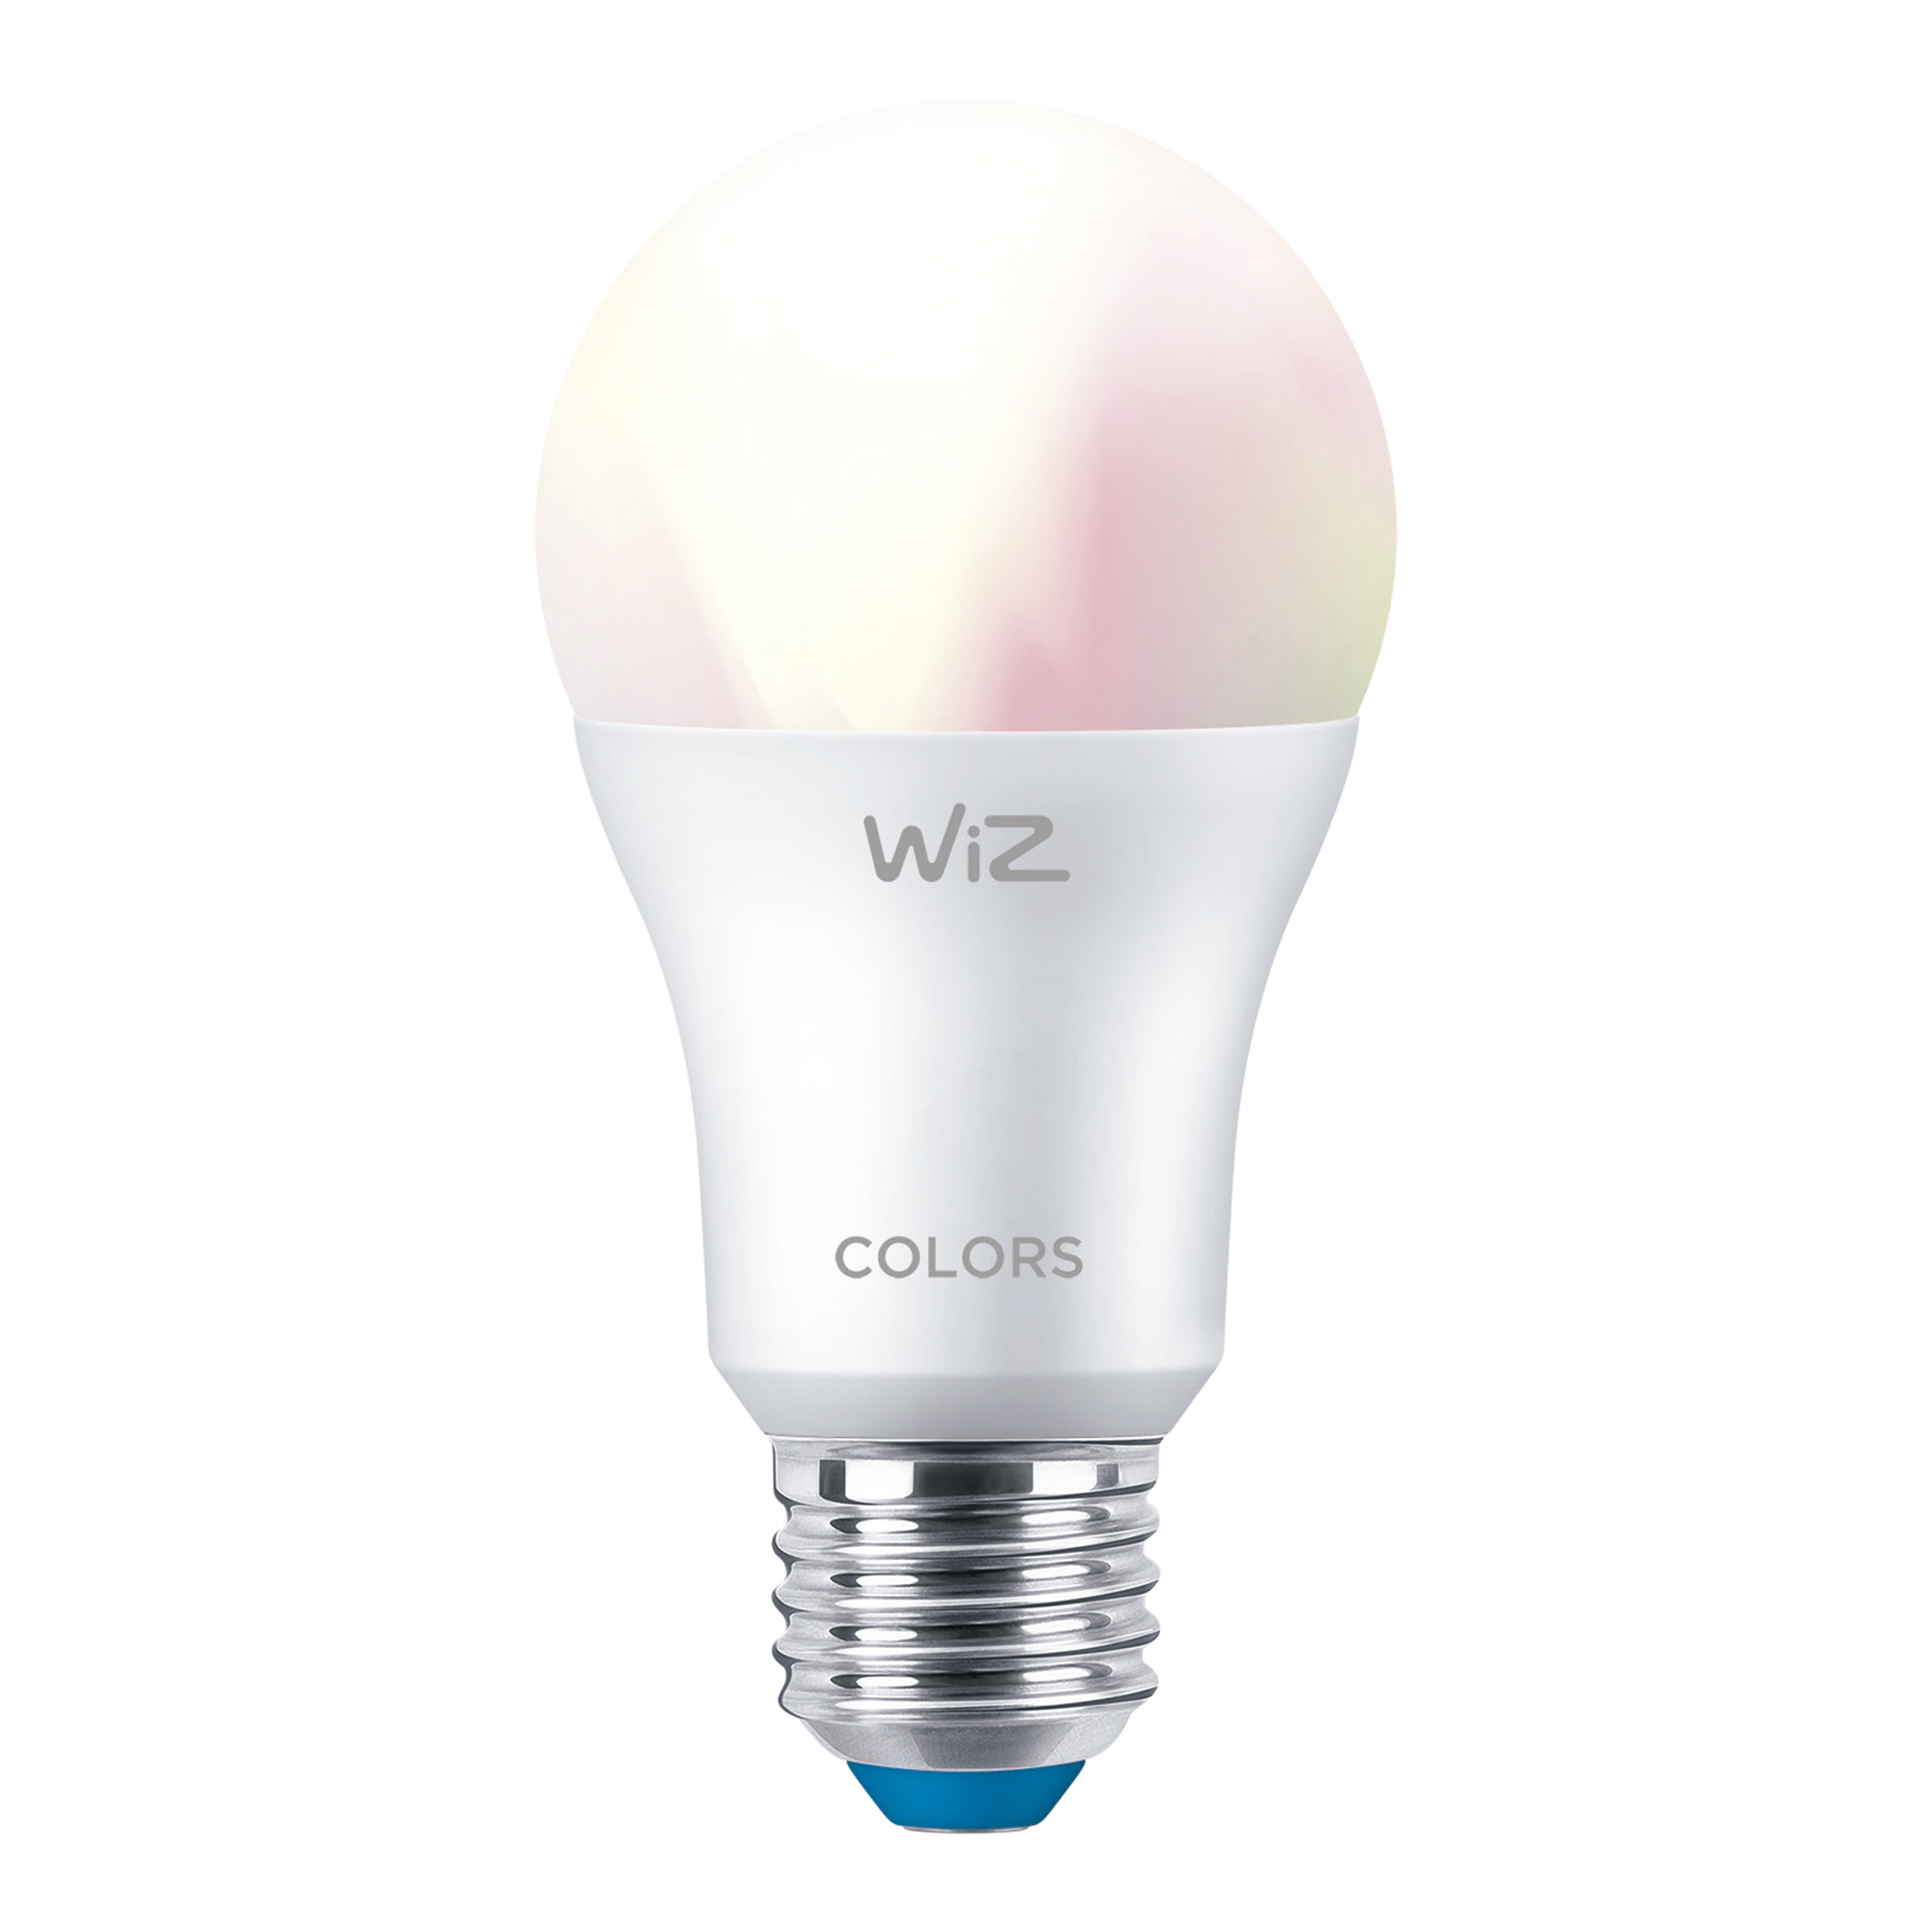 Lmpara Led Inteligente Philips Wiz 8W E27 Blanco Y Color